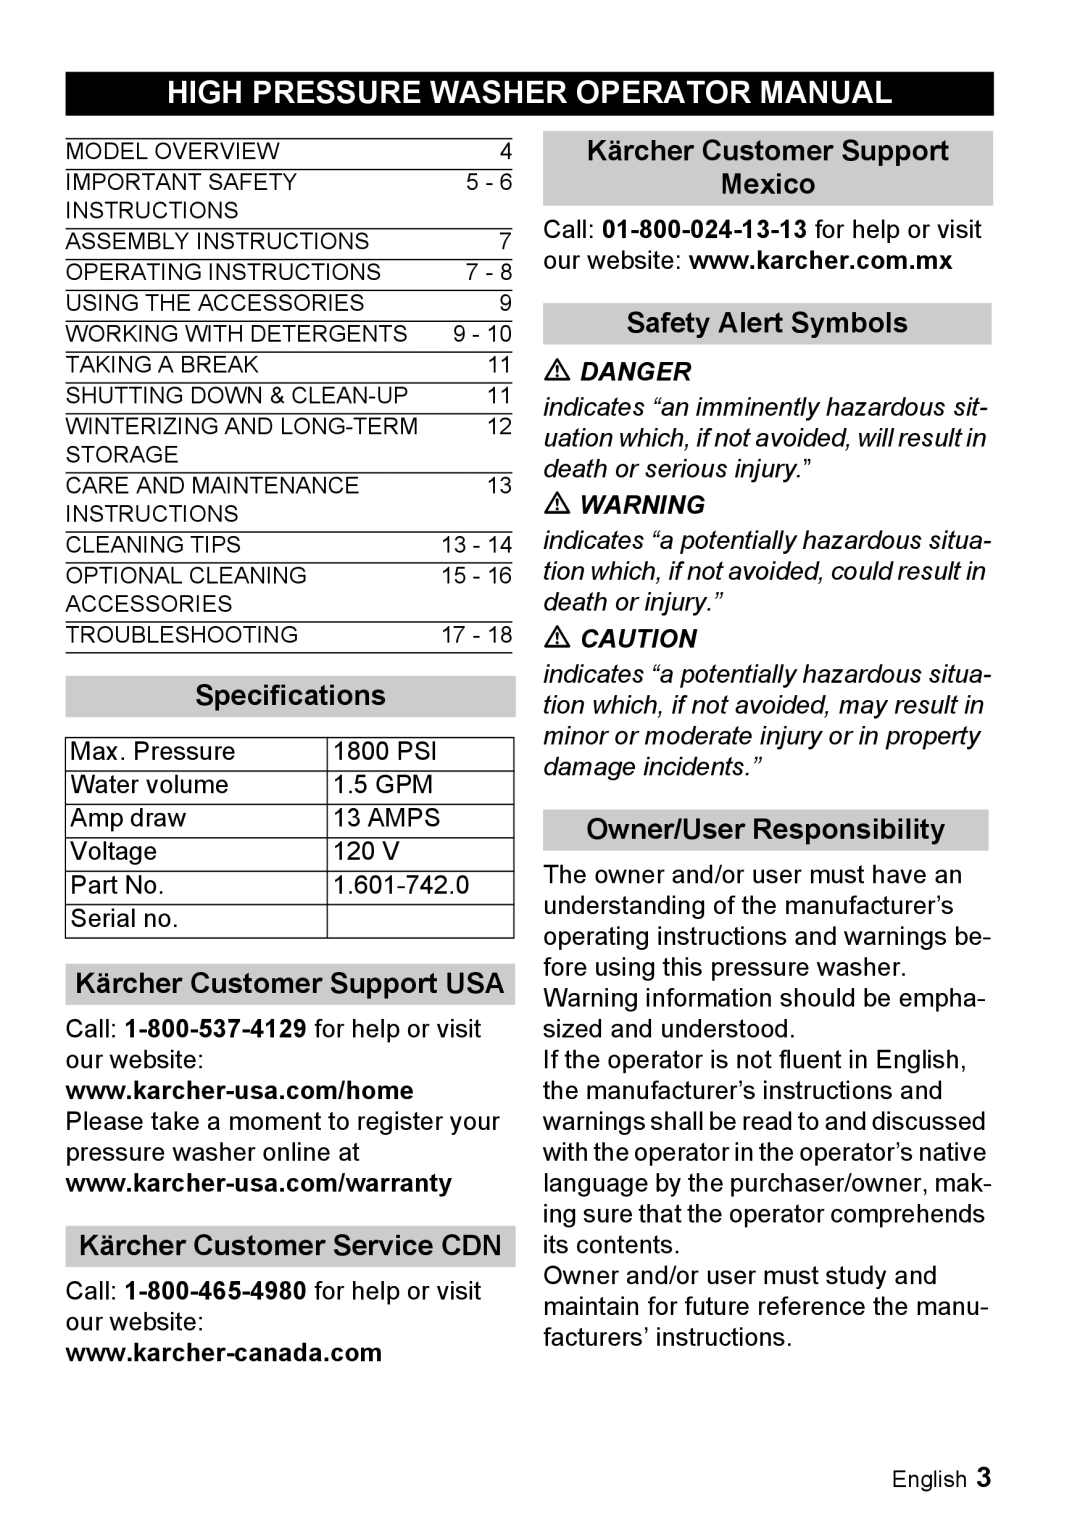 Karcher K 3.68 M High Pressure Washer Operator Manual, Specifications, Kärcher Customer Support USA, Safety Alert Symbols 